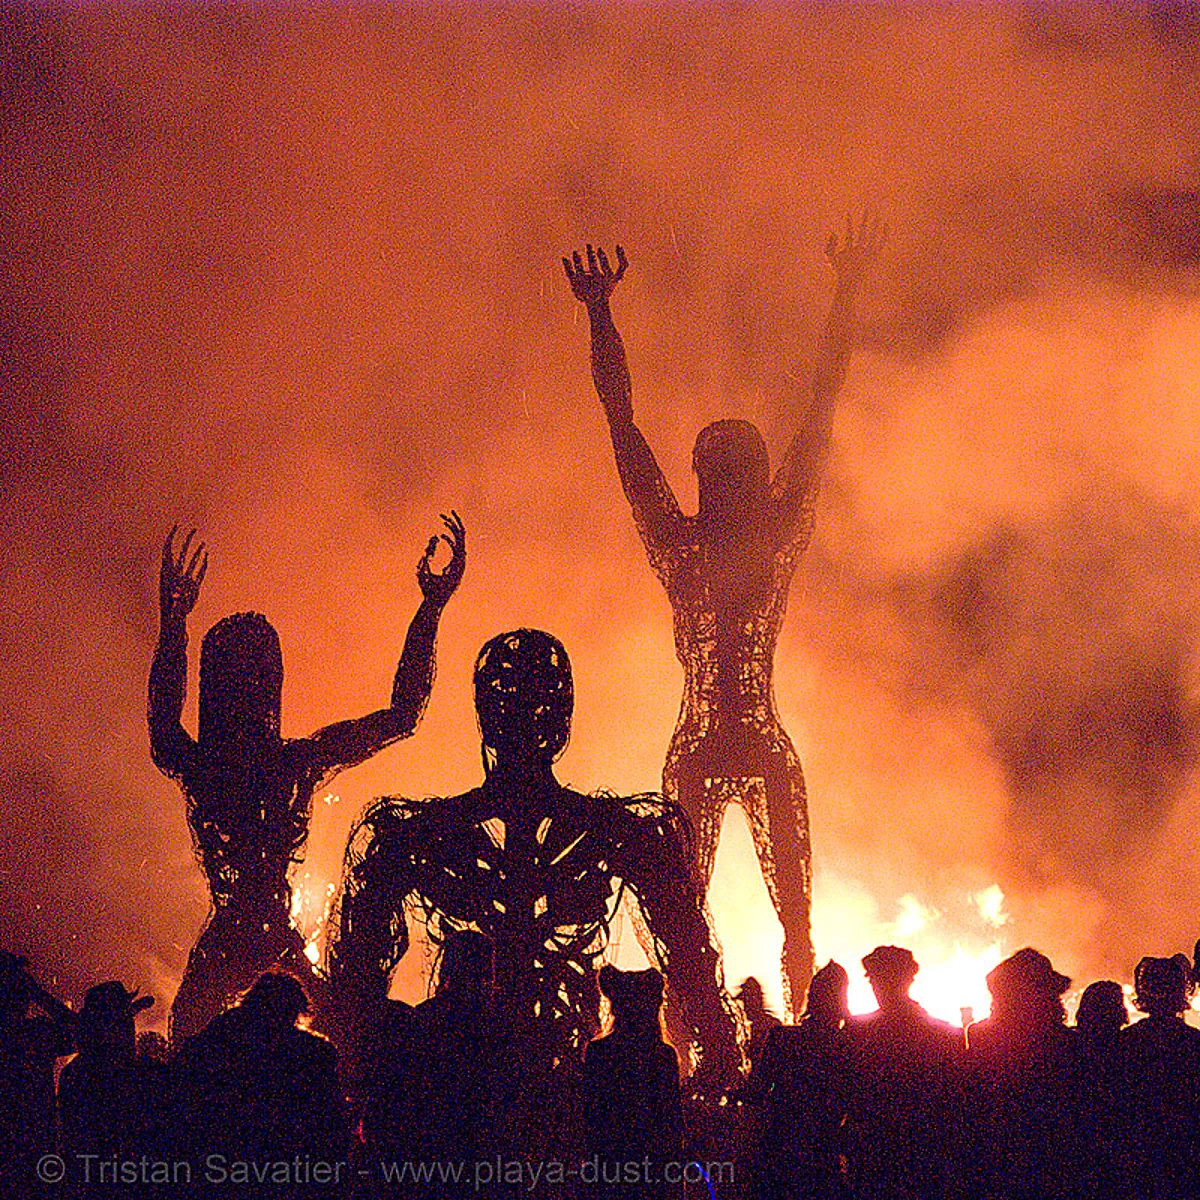 burning man - crude awakening, art installation, burning man at night, fire, sculptures